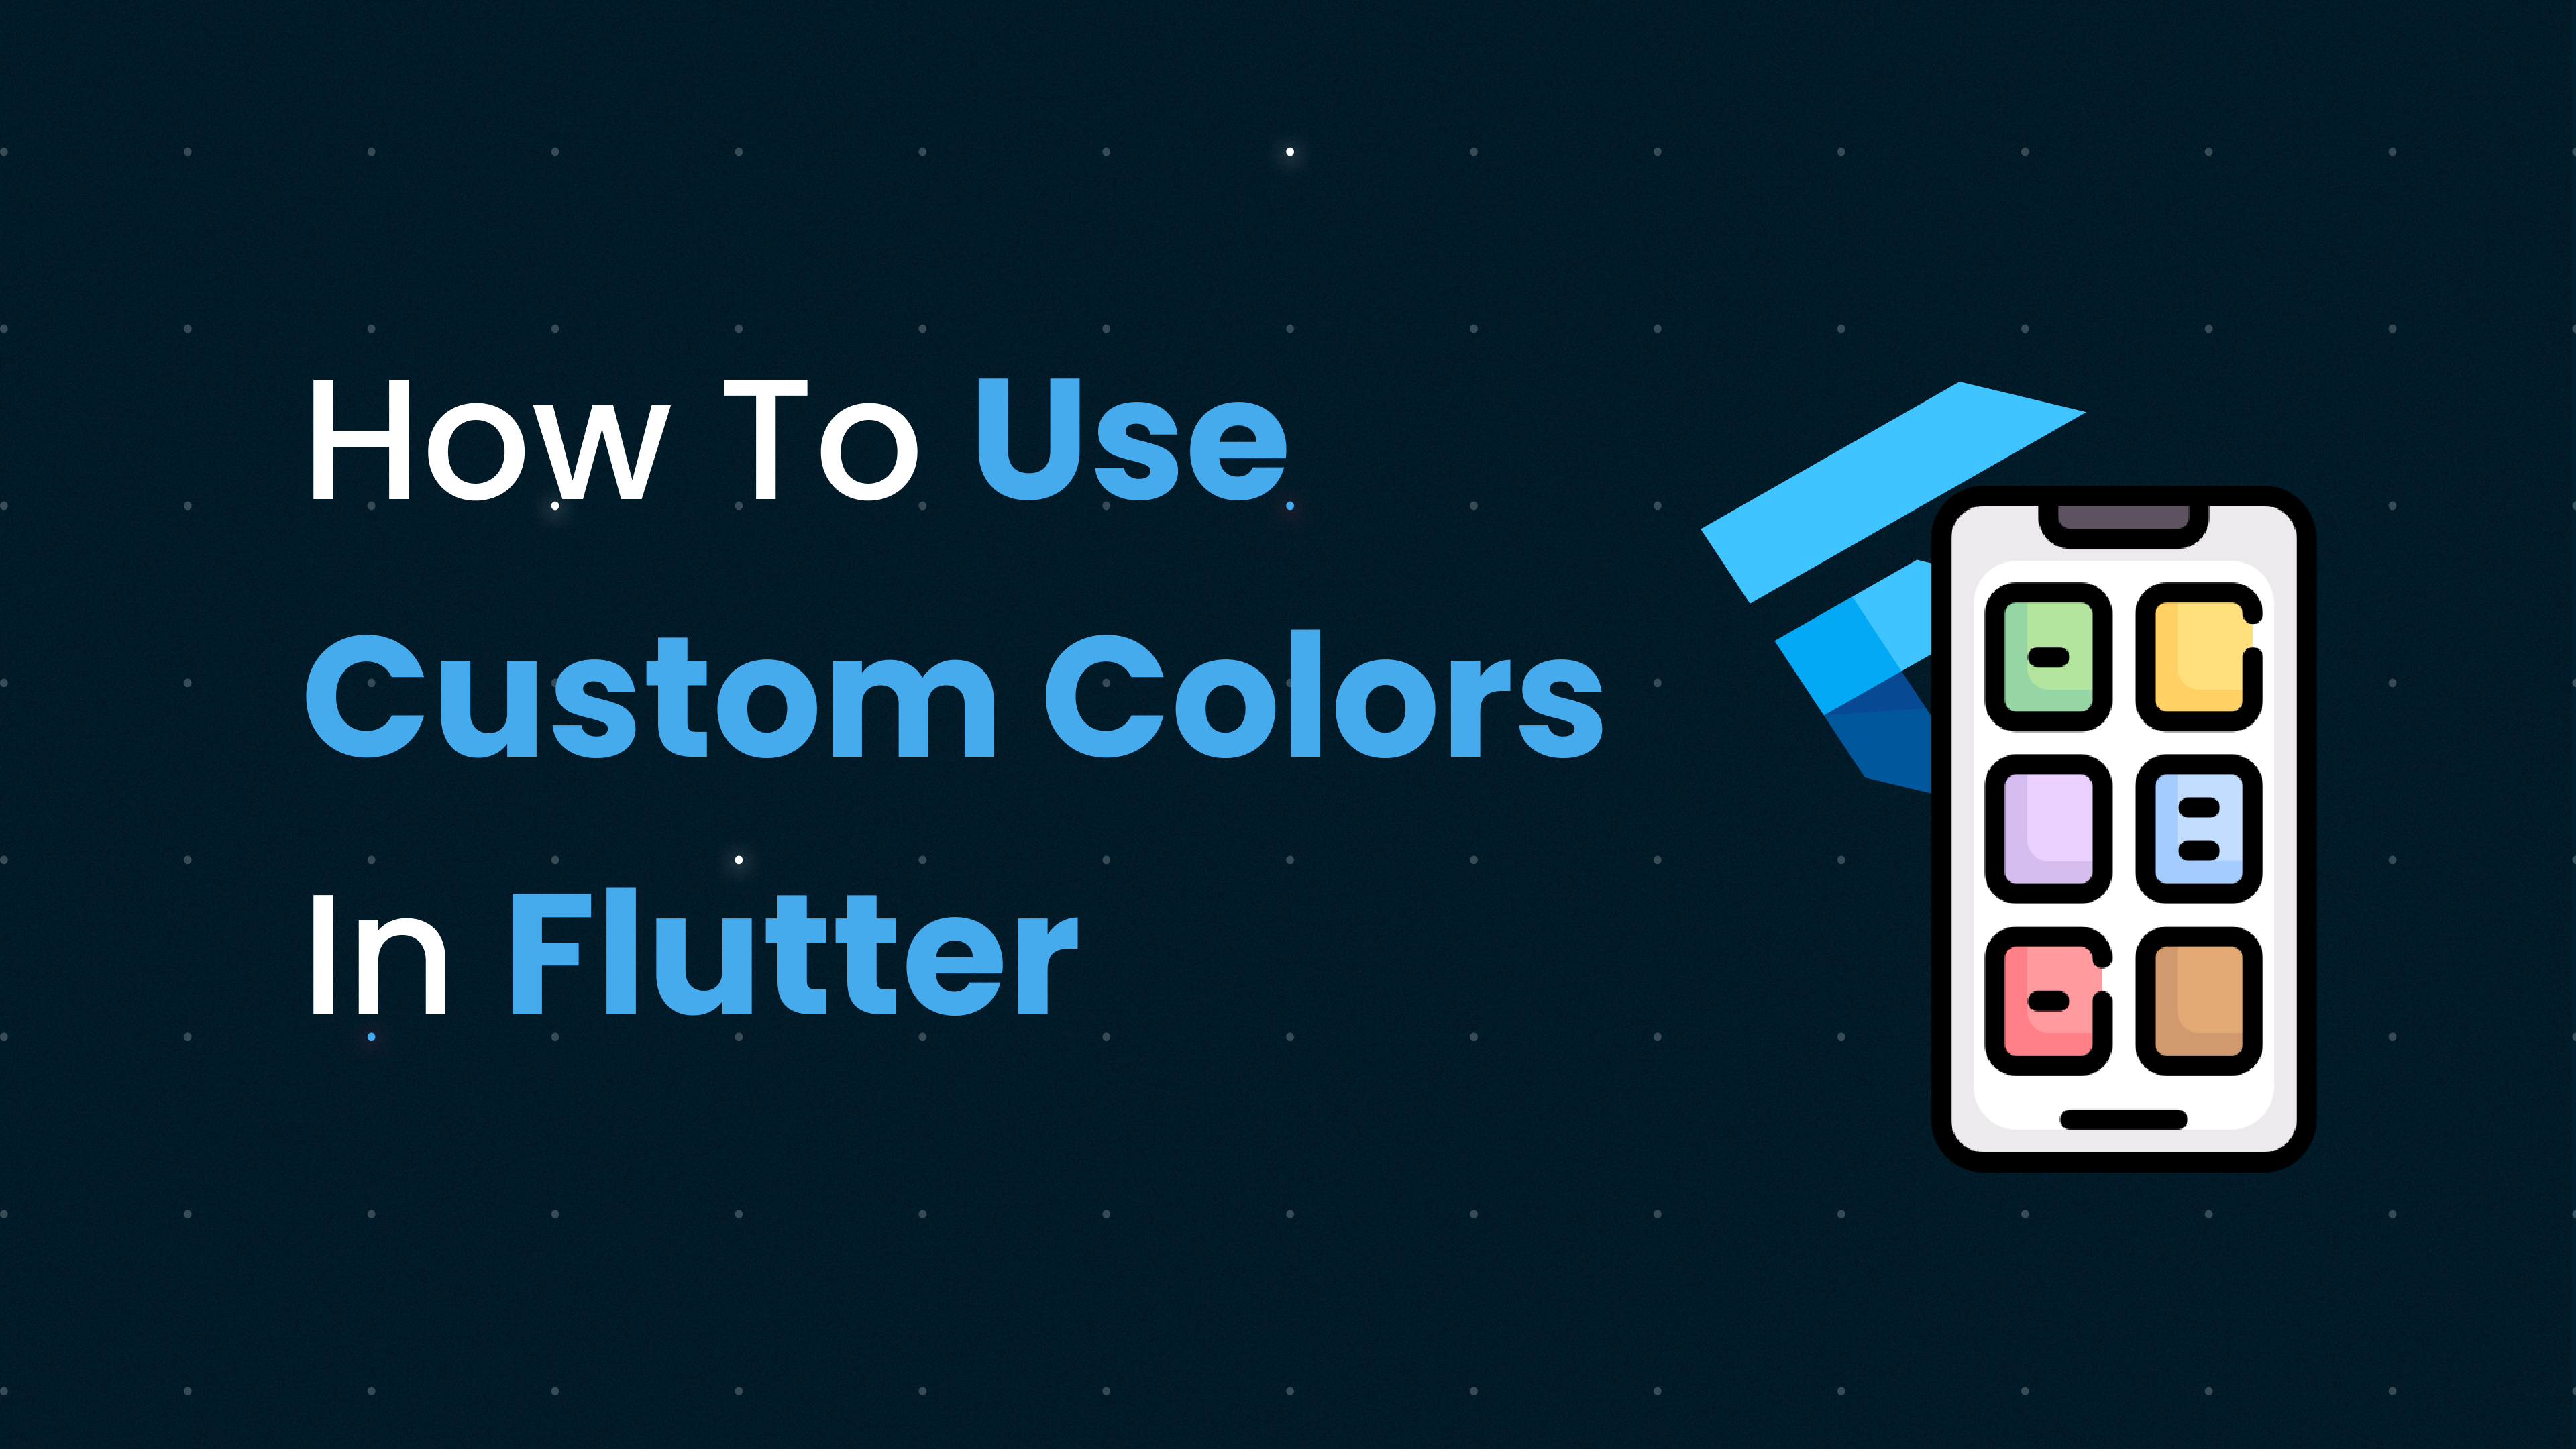 Use Custom Colors in Flutter